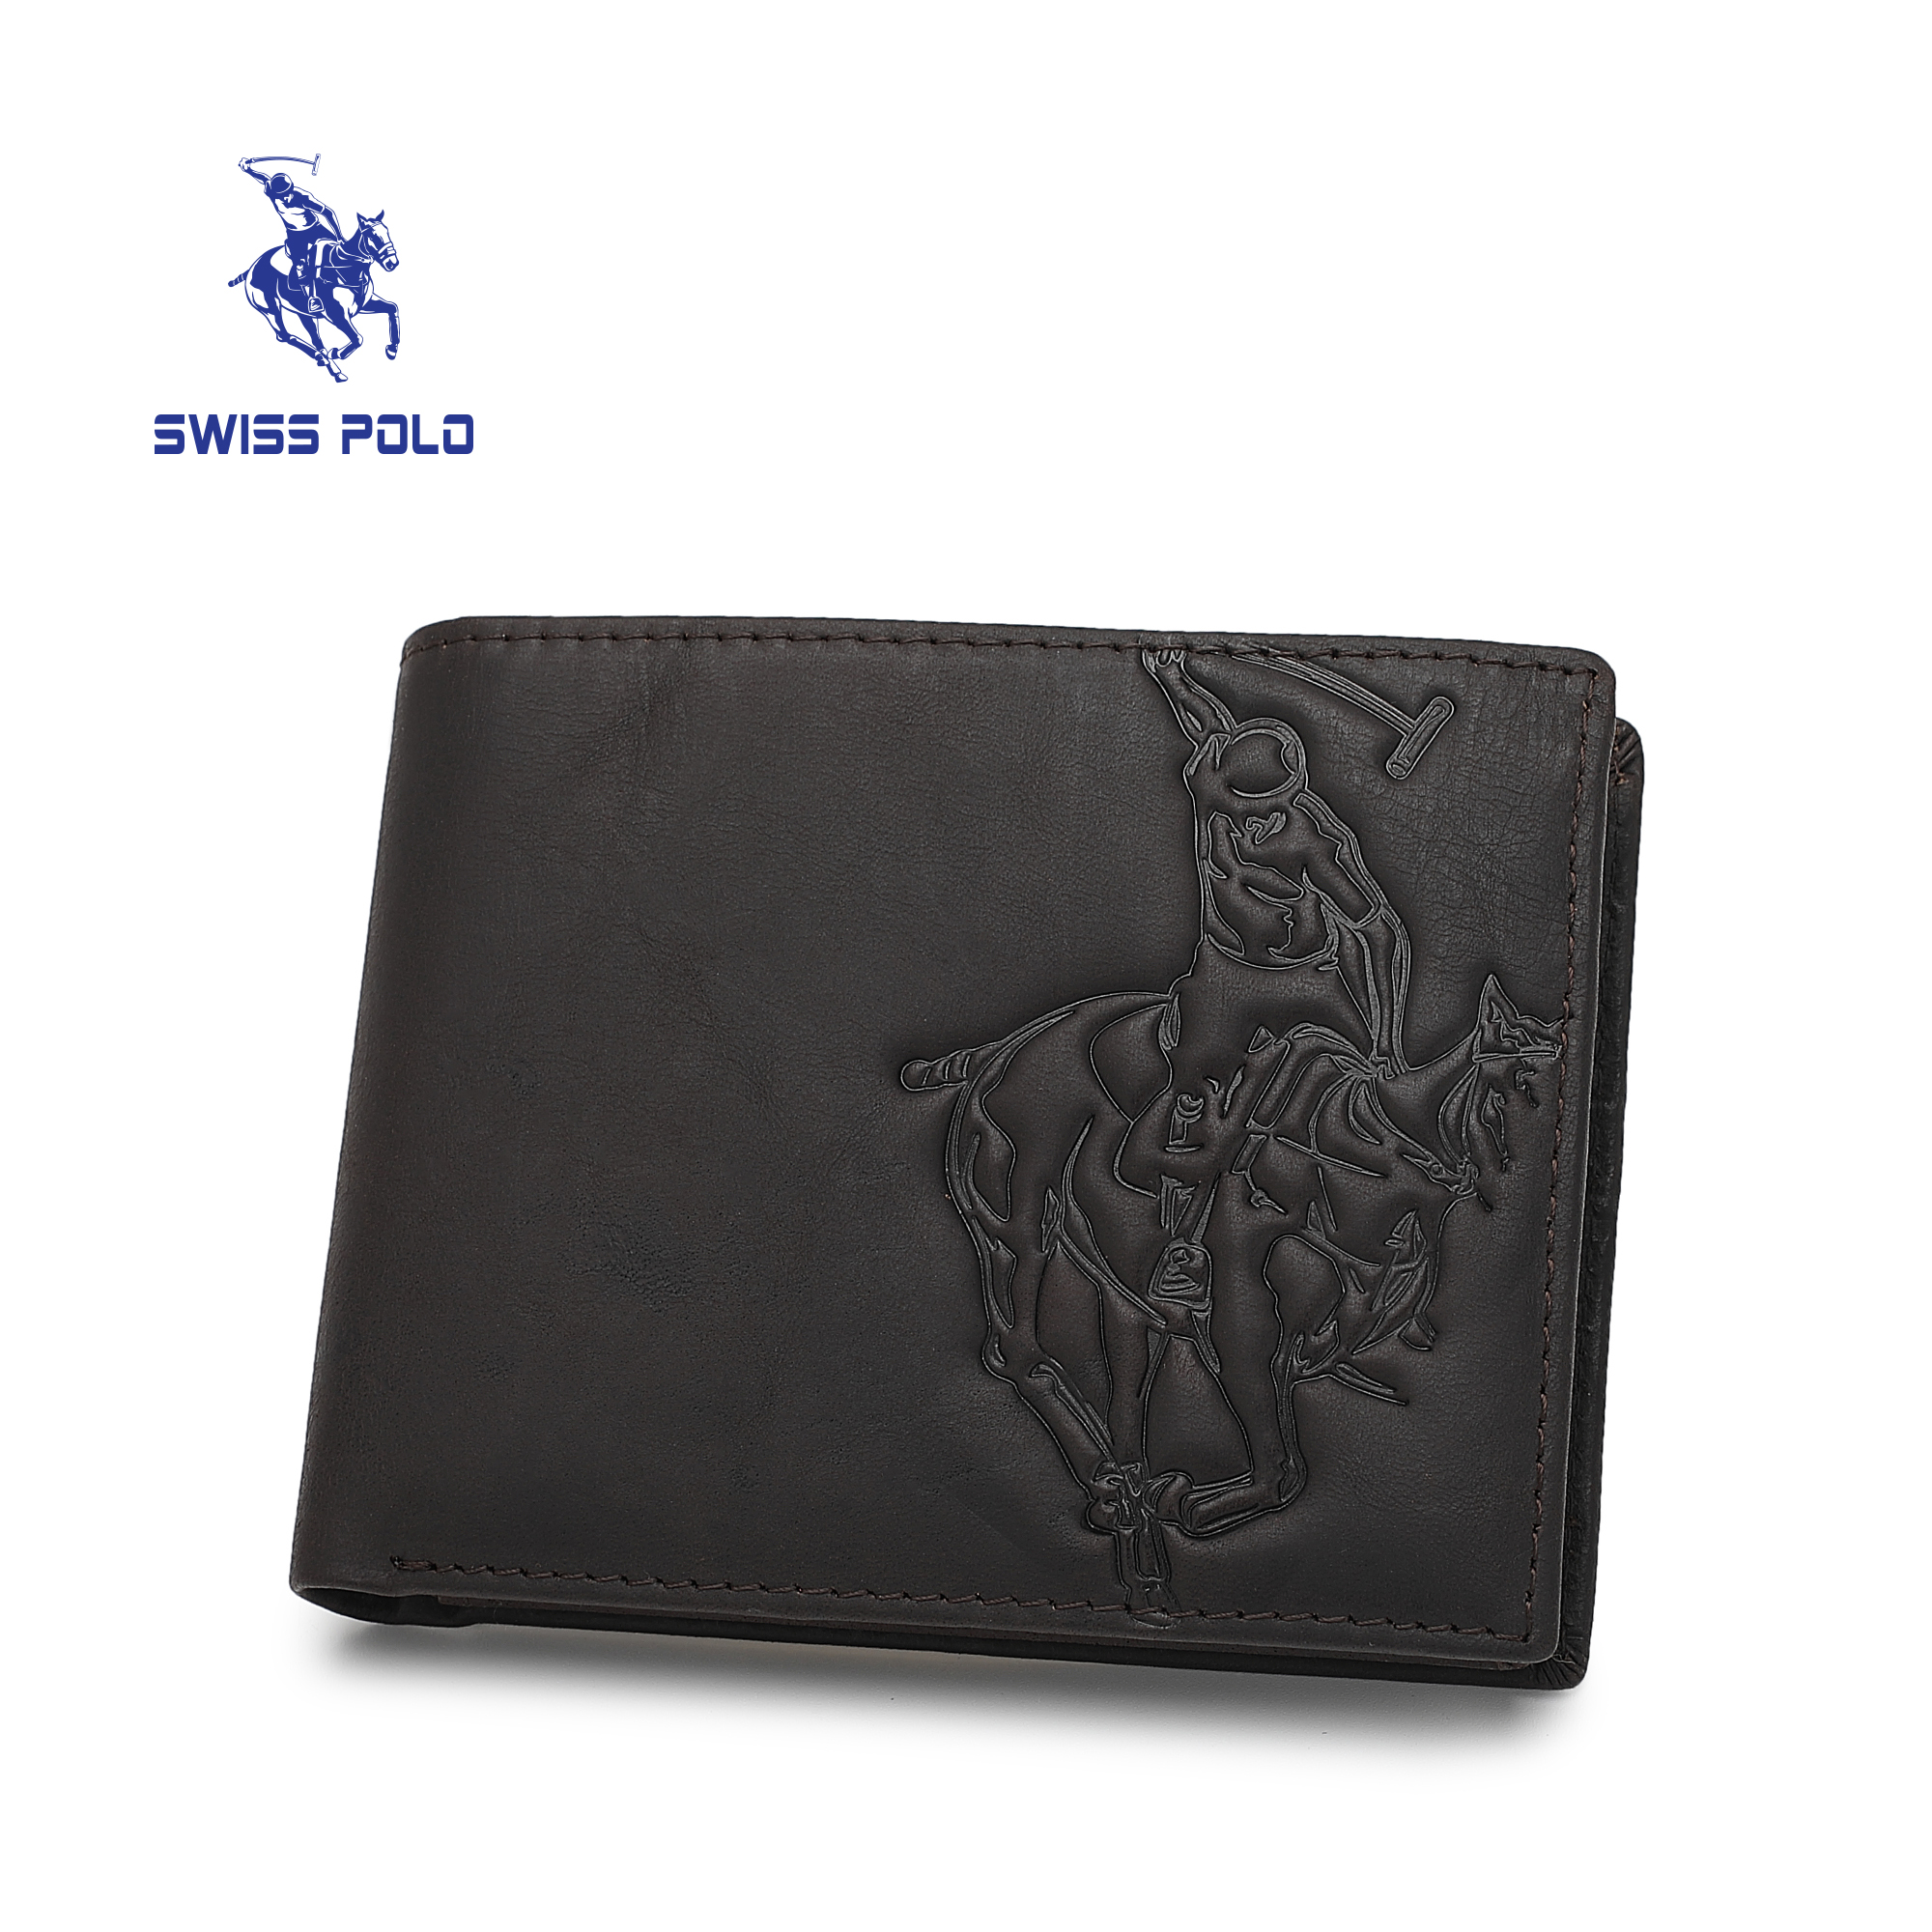 SWISS POLO Genuine Leather RFID Short Wallet SW 178-3 COFFEE